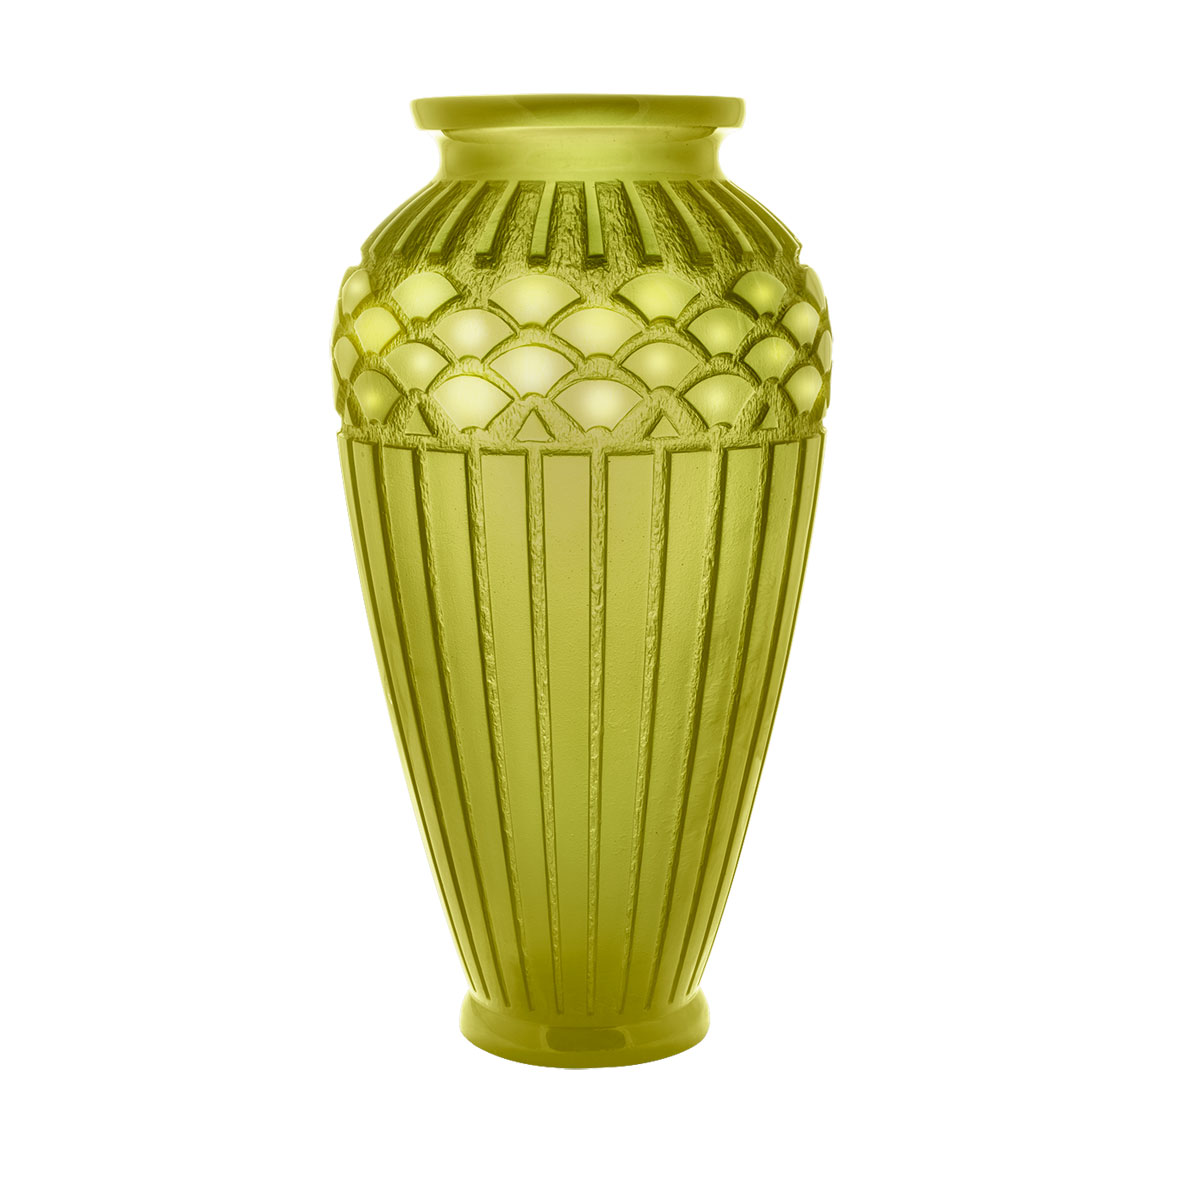 Daum Large Rhythms Vase in Olive Green